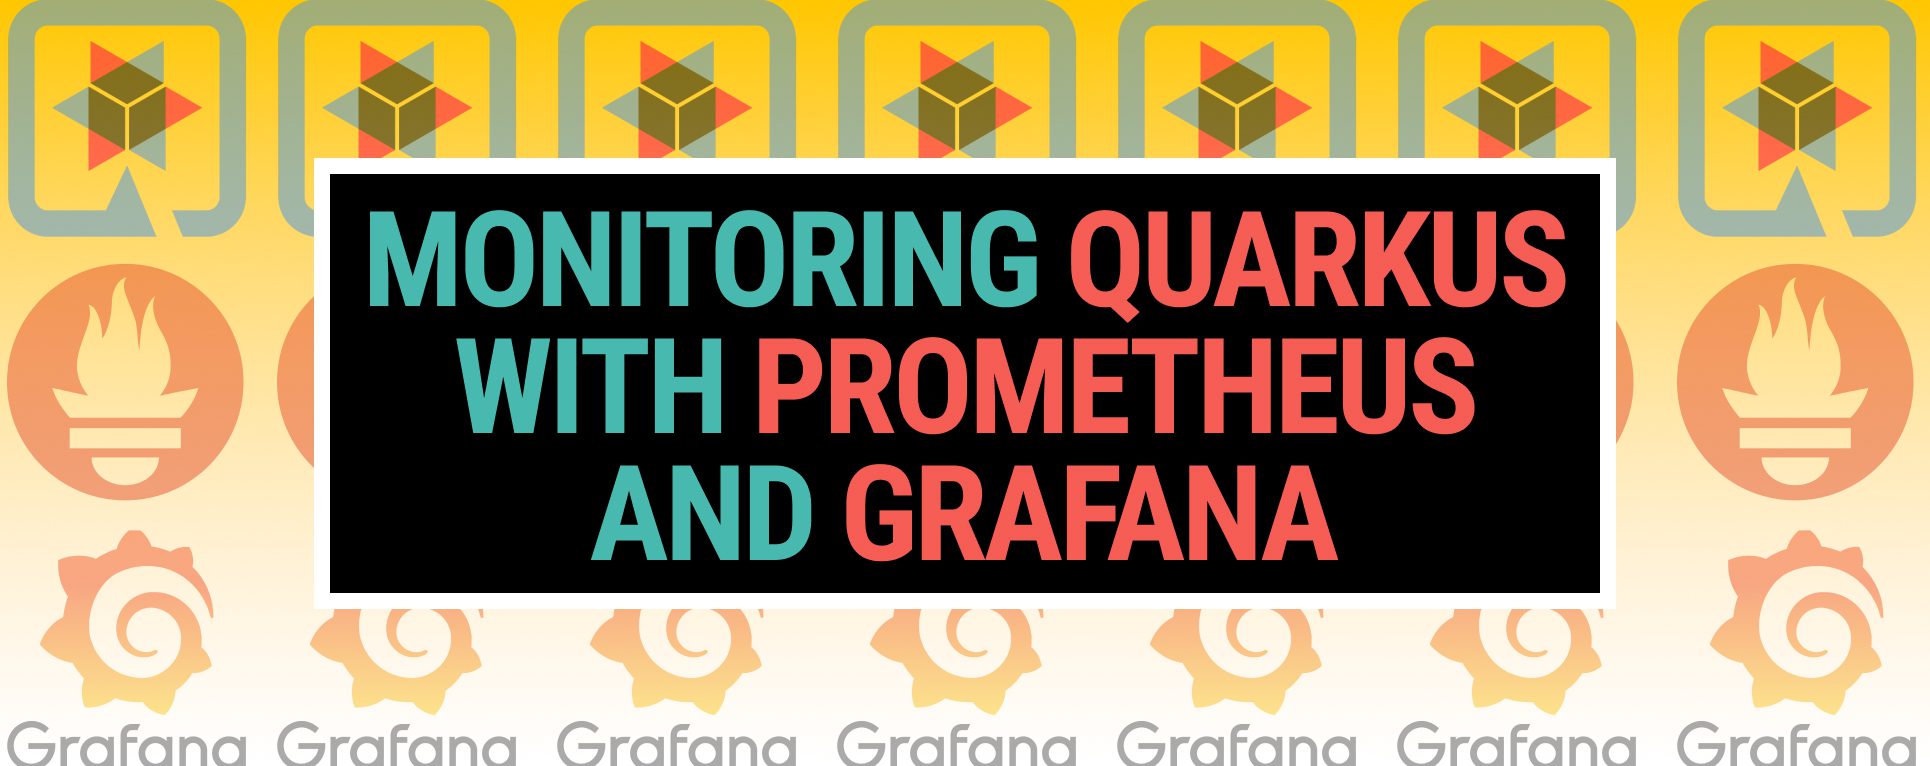 Monitoring Quarkus with Prometheus and Grafana